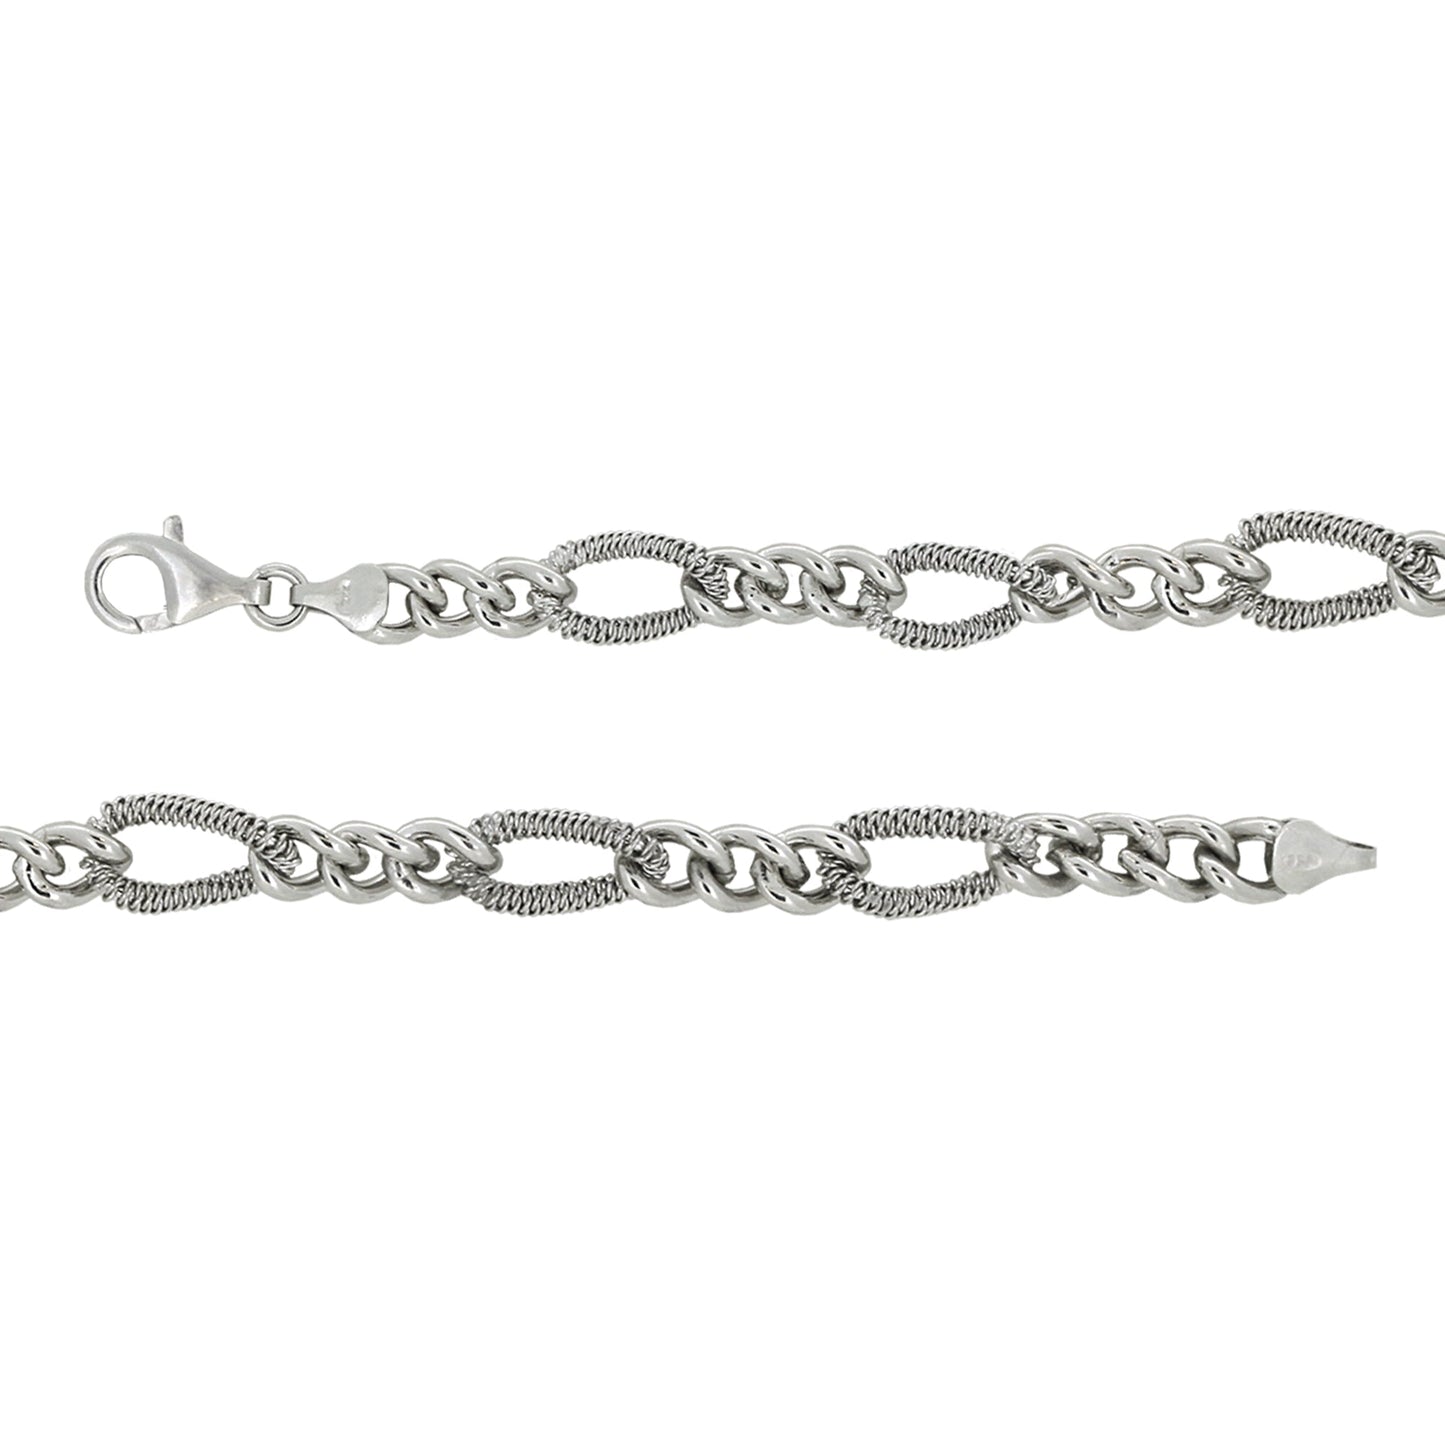 Franco Stellari Italian Sterling Silver Textured Figaro Link Bracelet, 7.5"